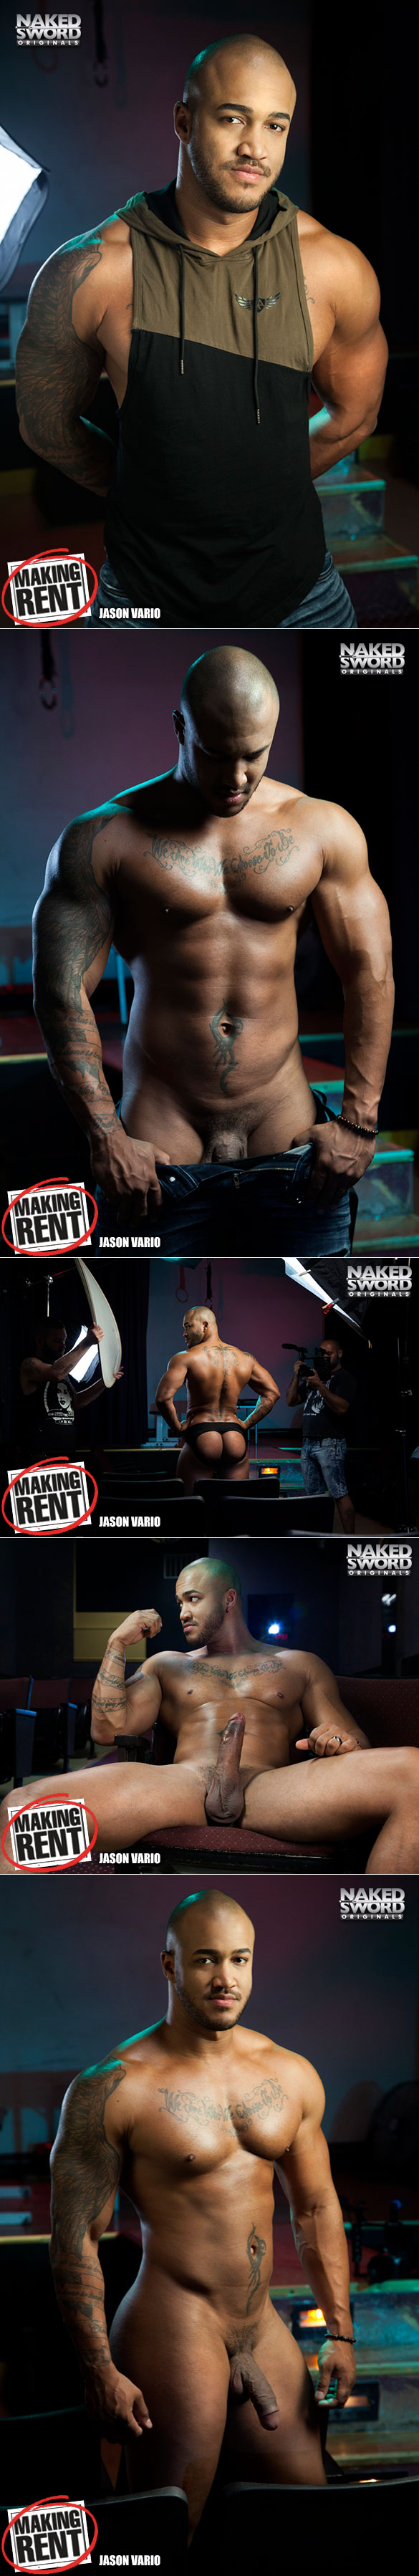 NakedSword Originals: Jason Vario, Pierce Paris and Rikk York's hot threeway in "Making Rent"